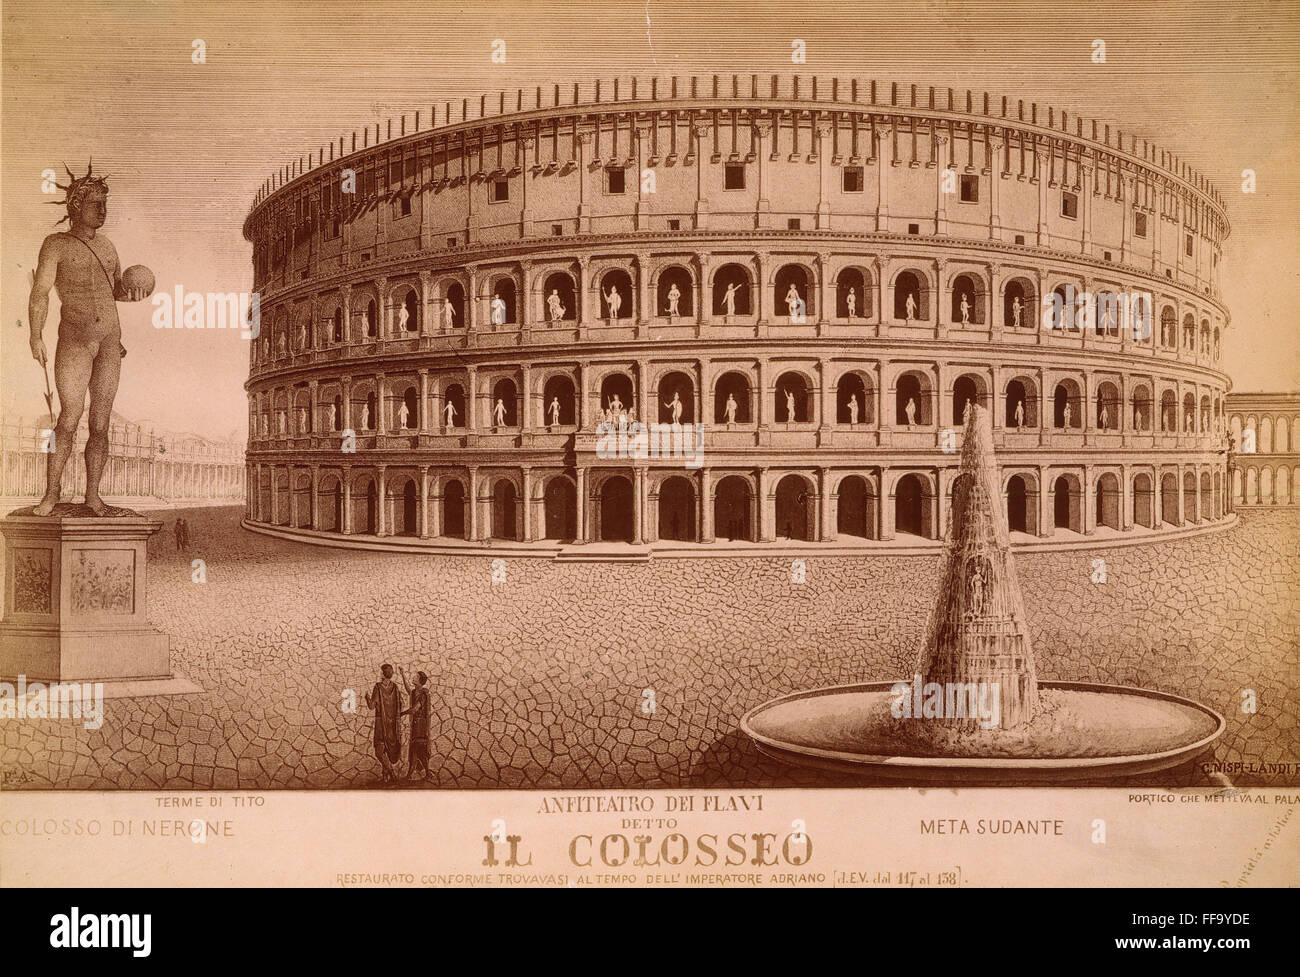 ROME: COLOSSEUM. /nThe Colosseum at Rome: copper engraving, Italian, 17th century. Stock Photo